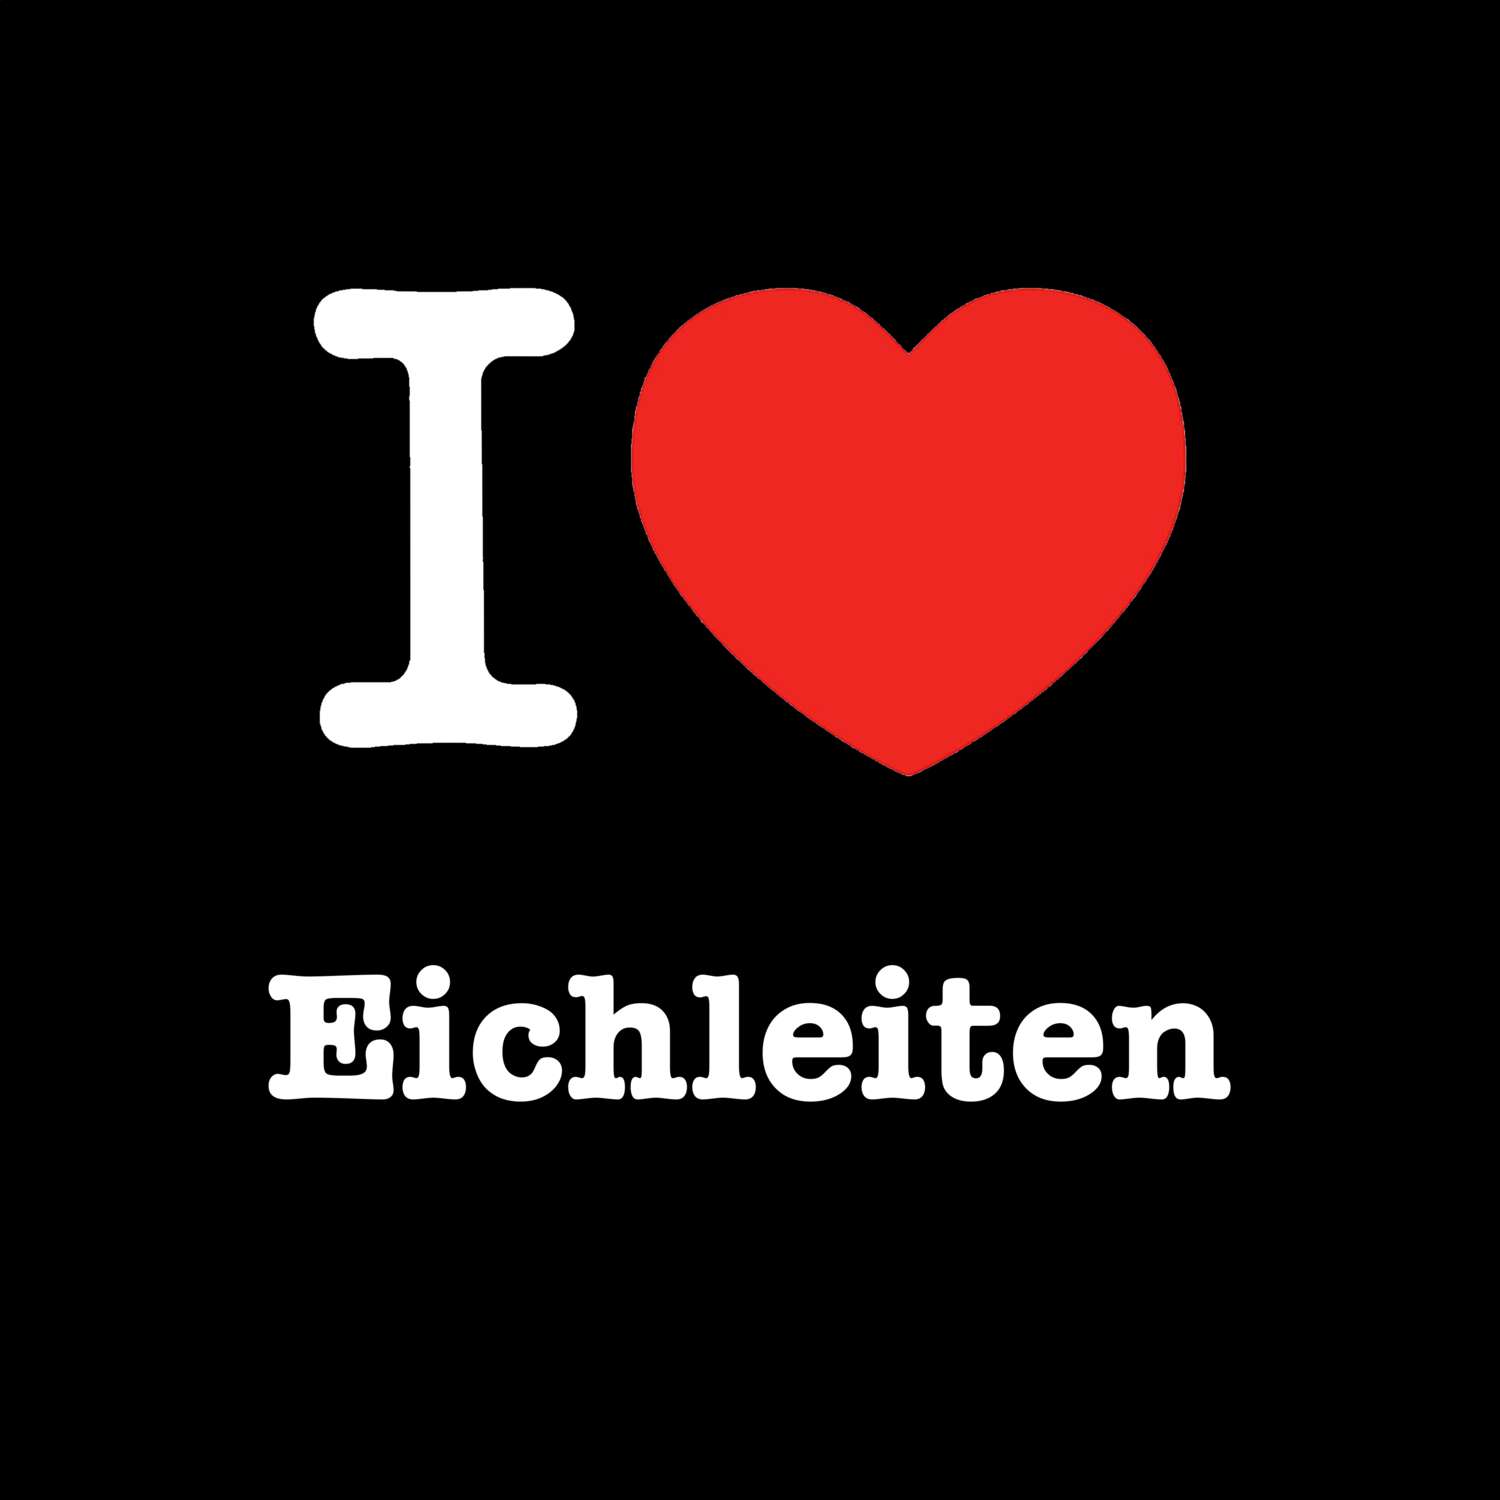 Eichleiten T-Shirt »I love«